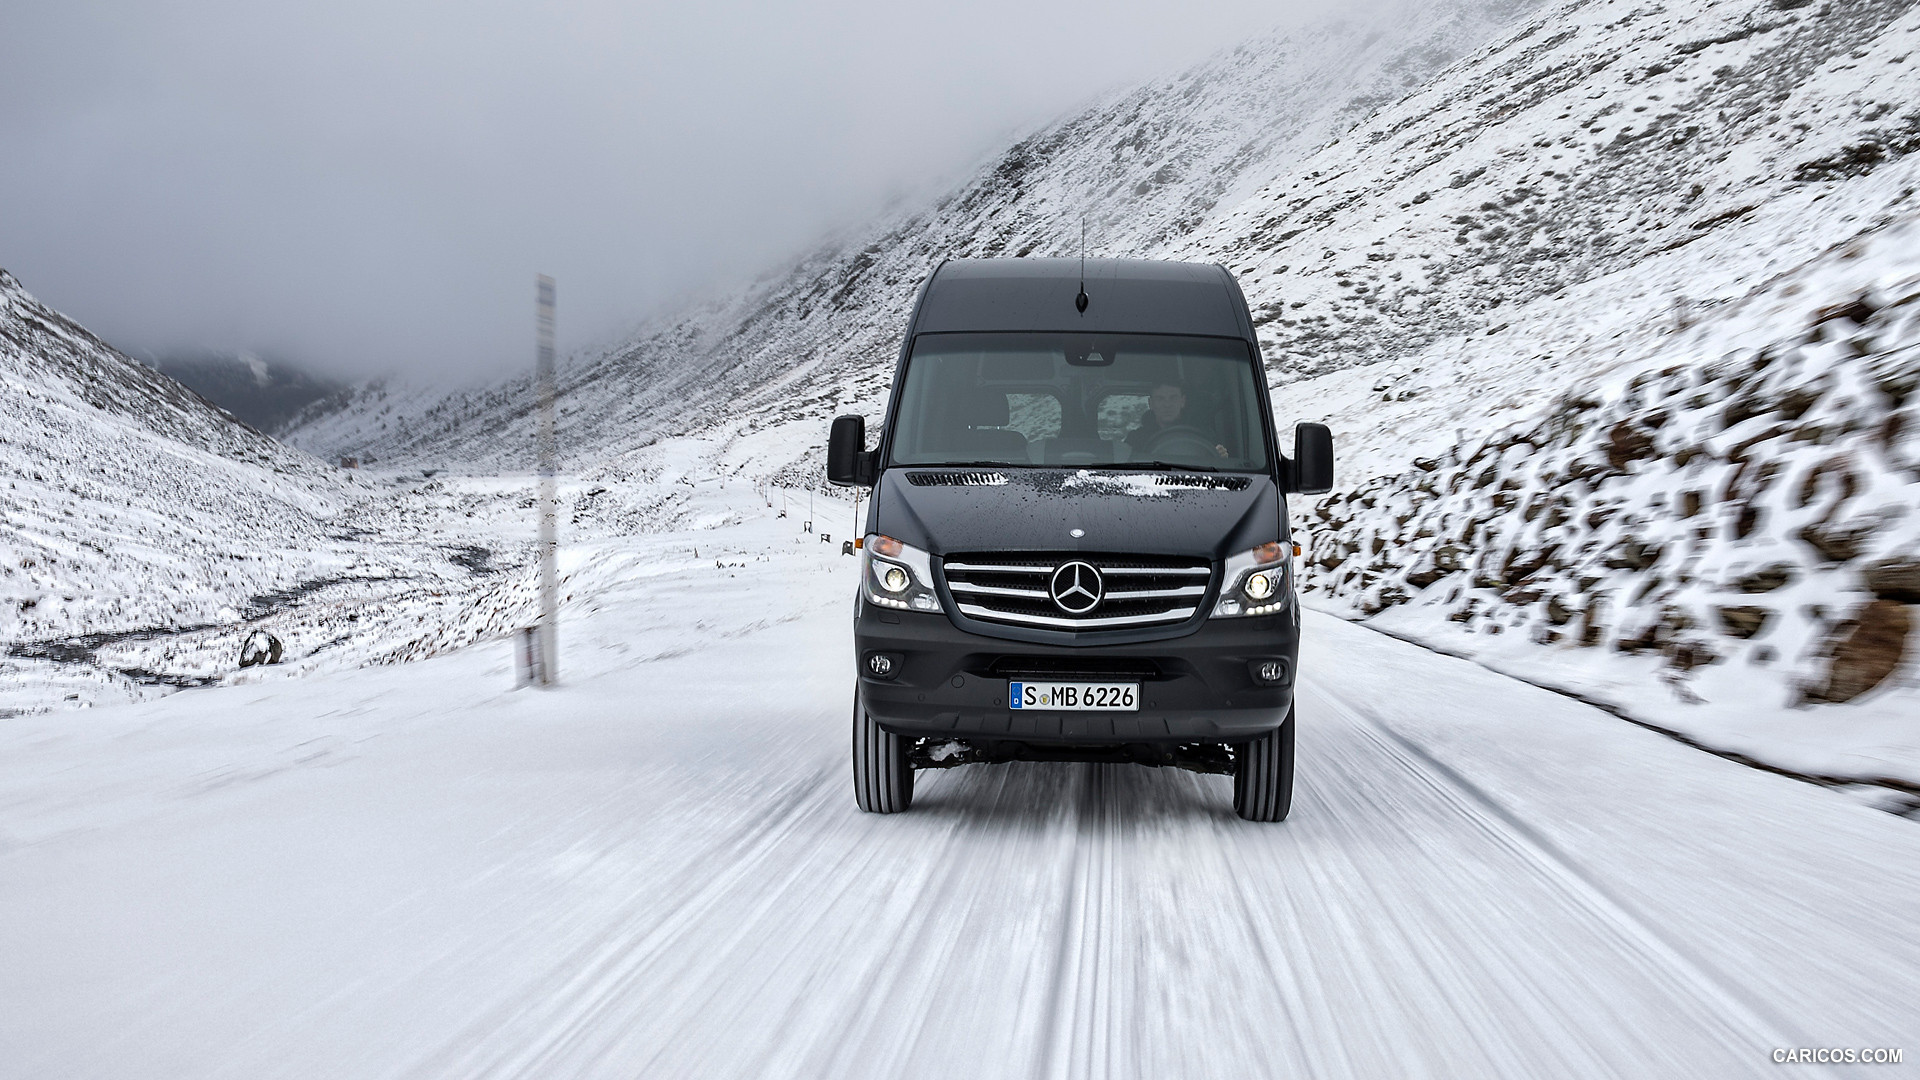 2015 Mercedes-Benz Sprinter 316 BlueTec 4X4 - In Snow - Front, #14 of 126